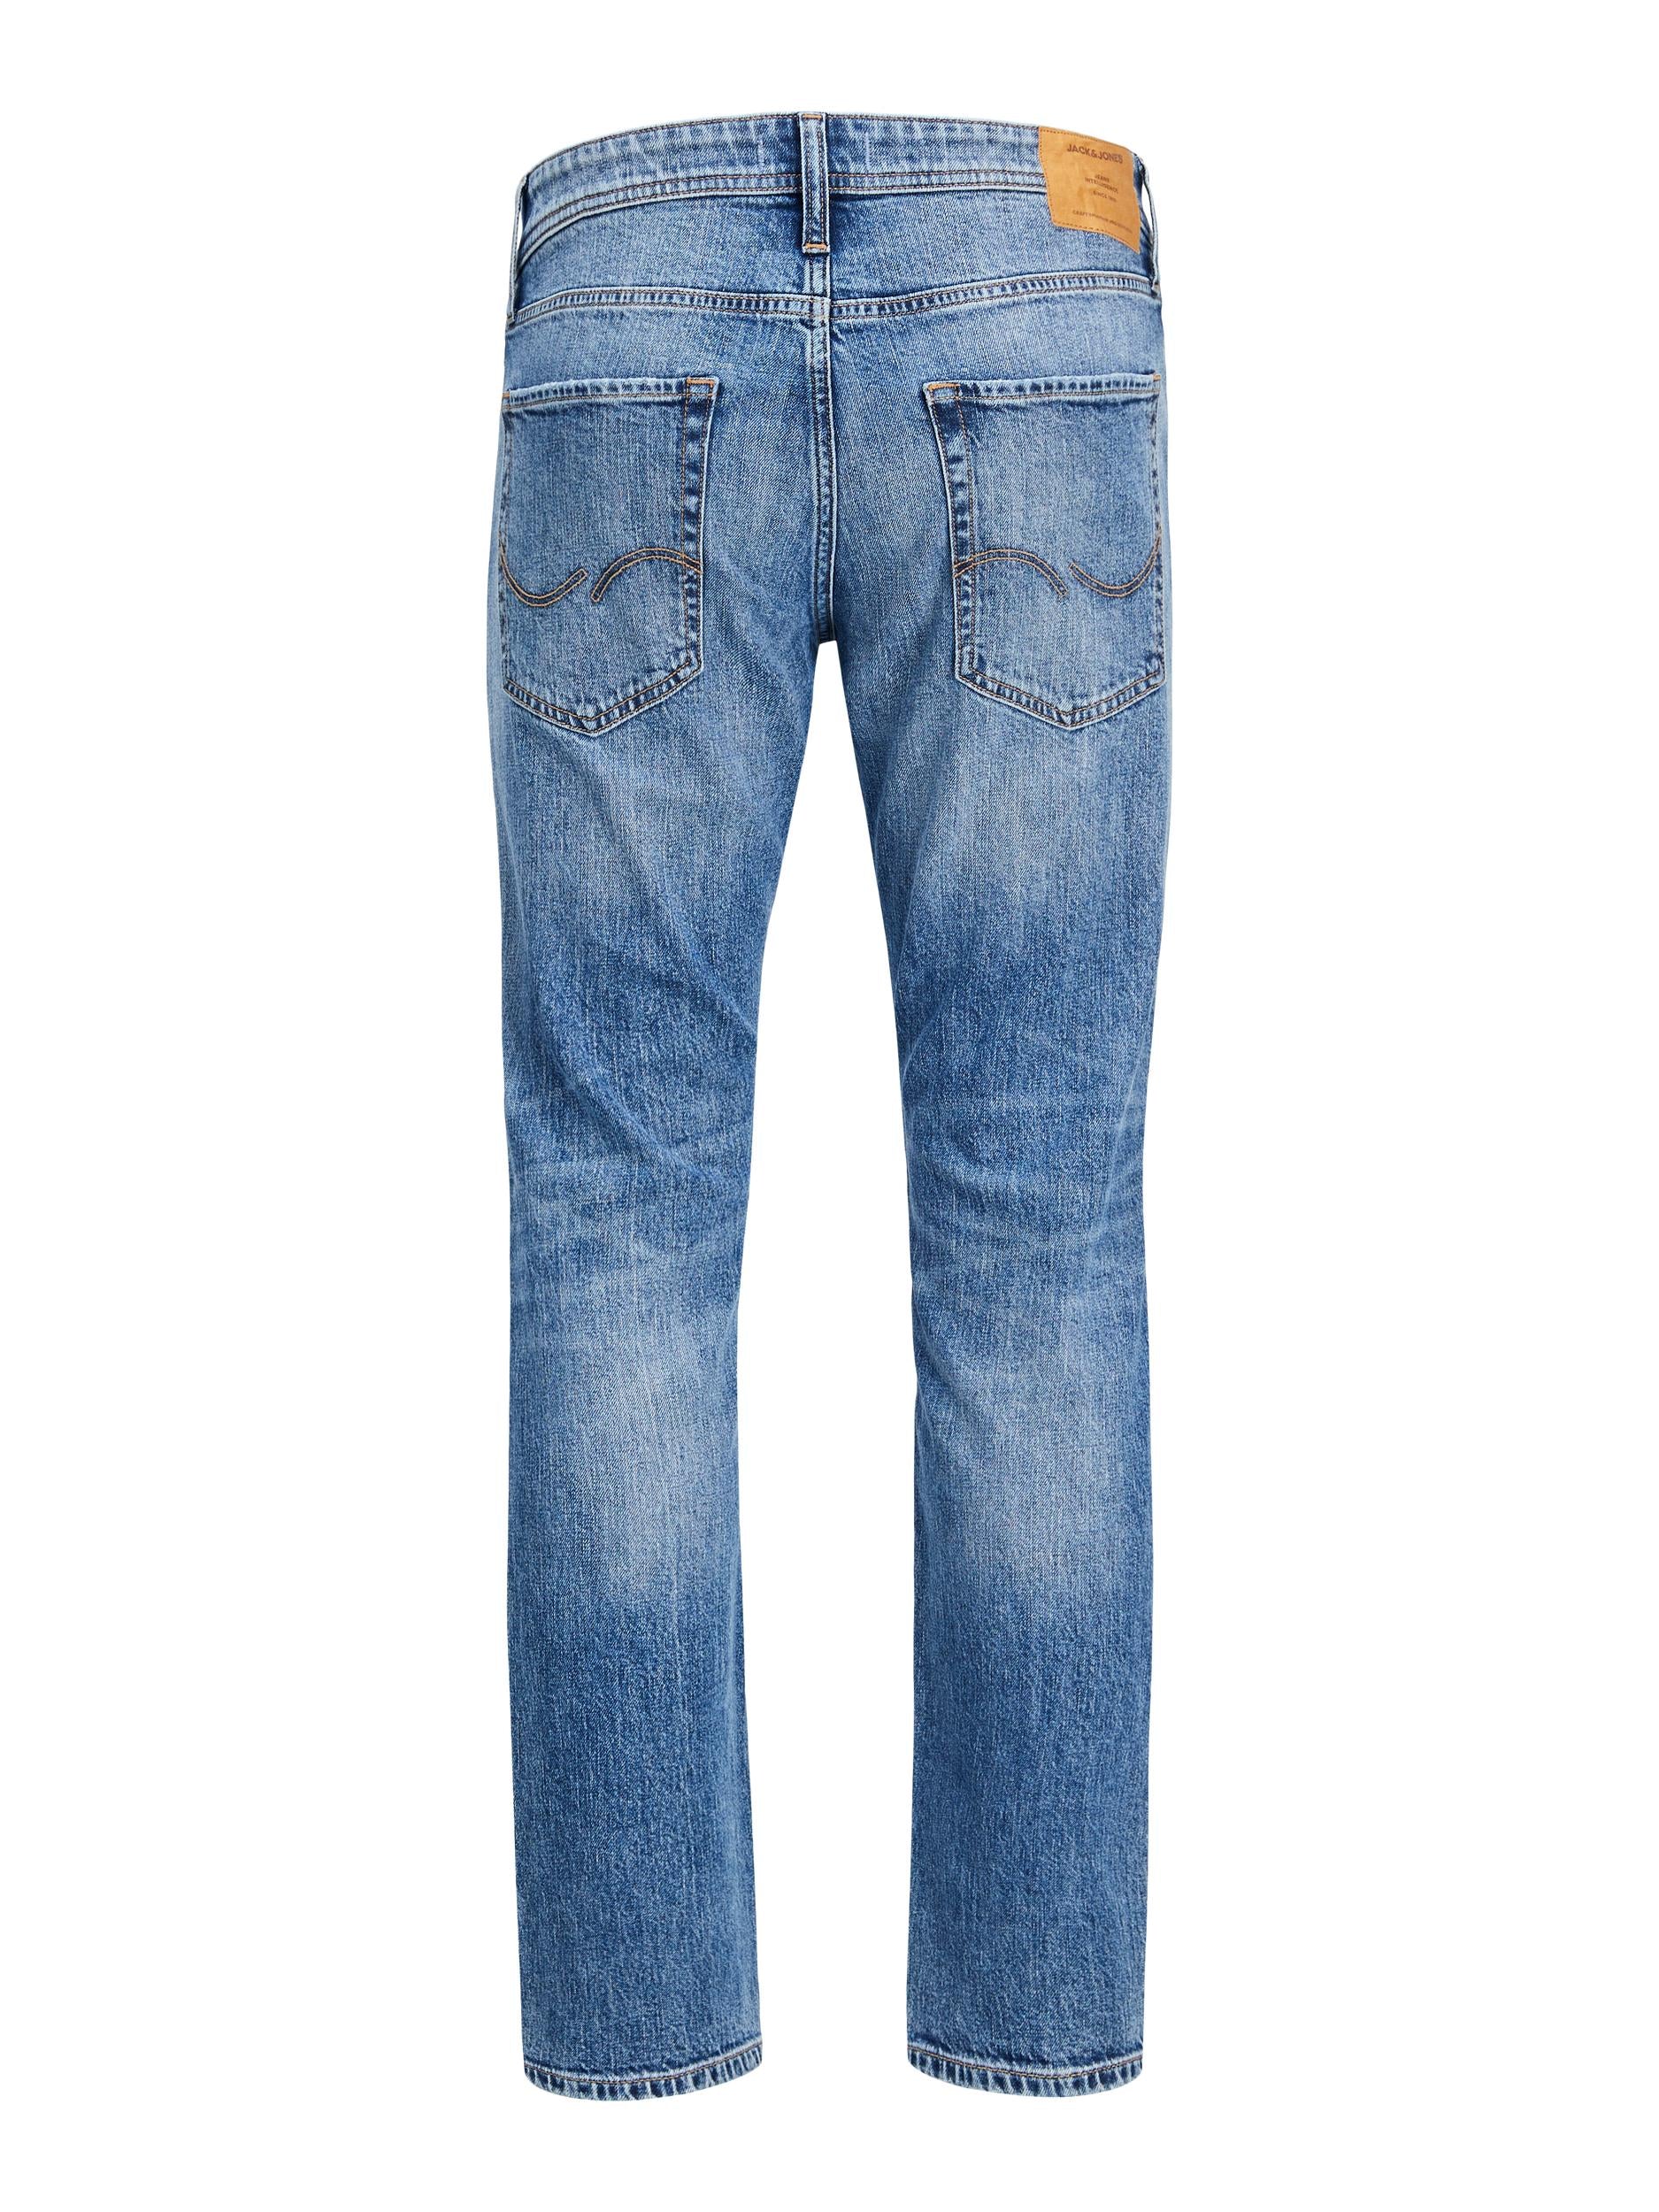 Jack & Jones Mike Original 405 Comfort Fit Jeans Mid Blue - Raw Menswear